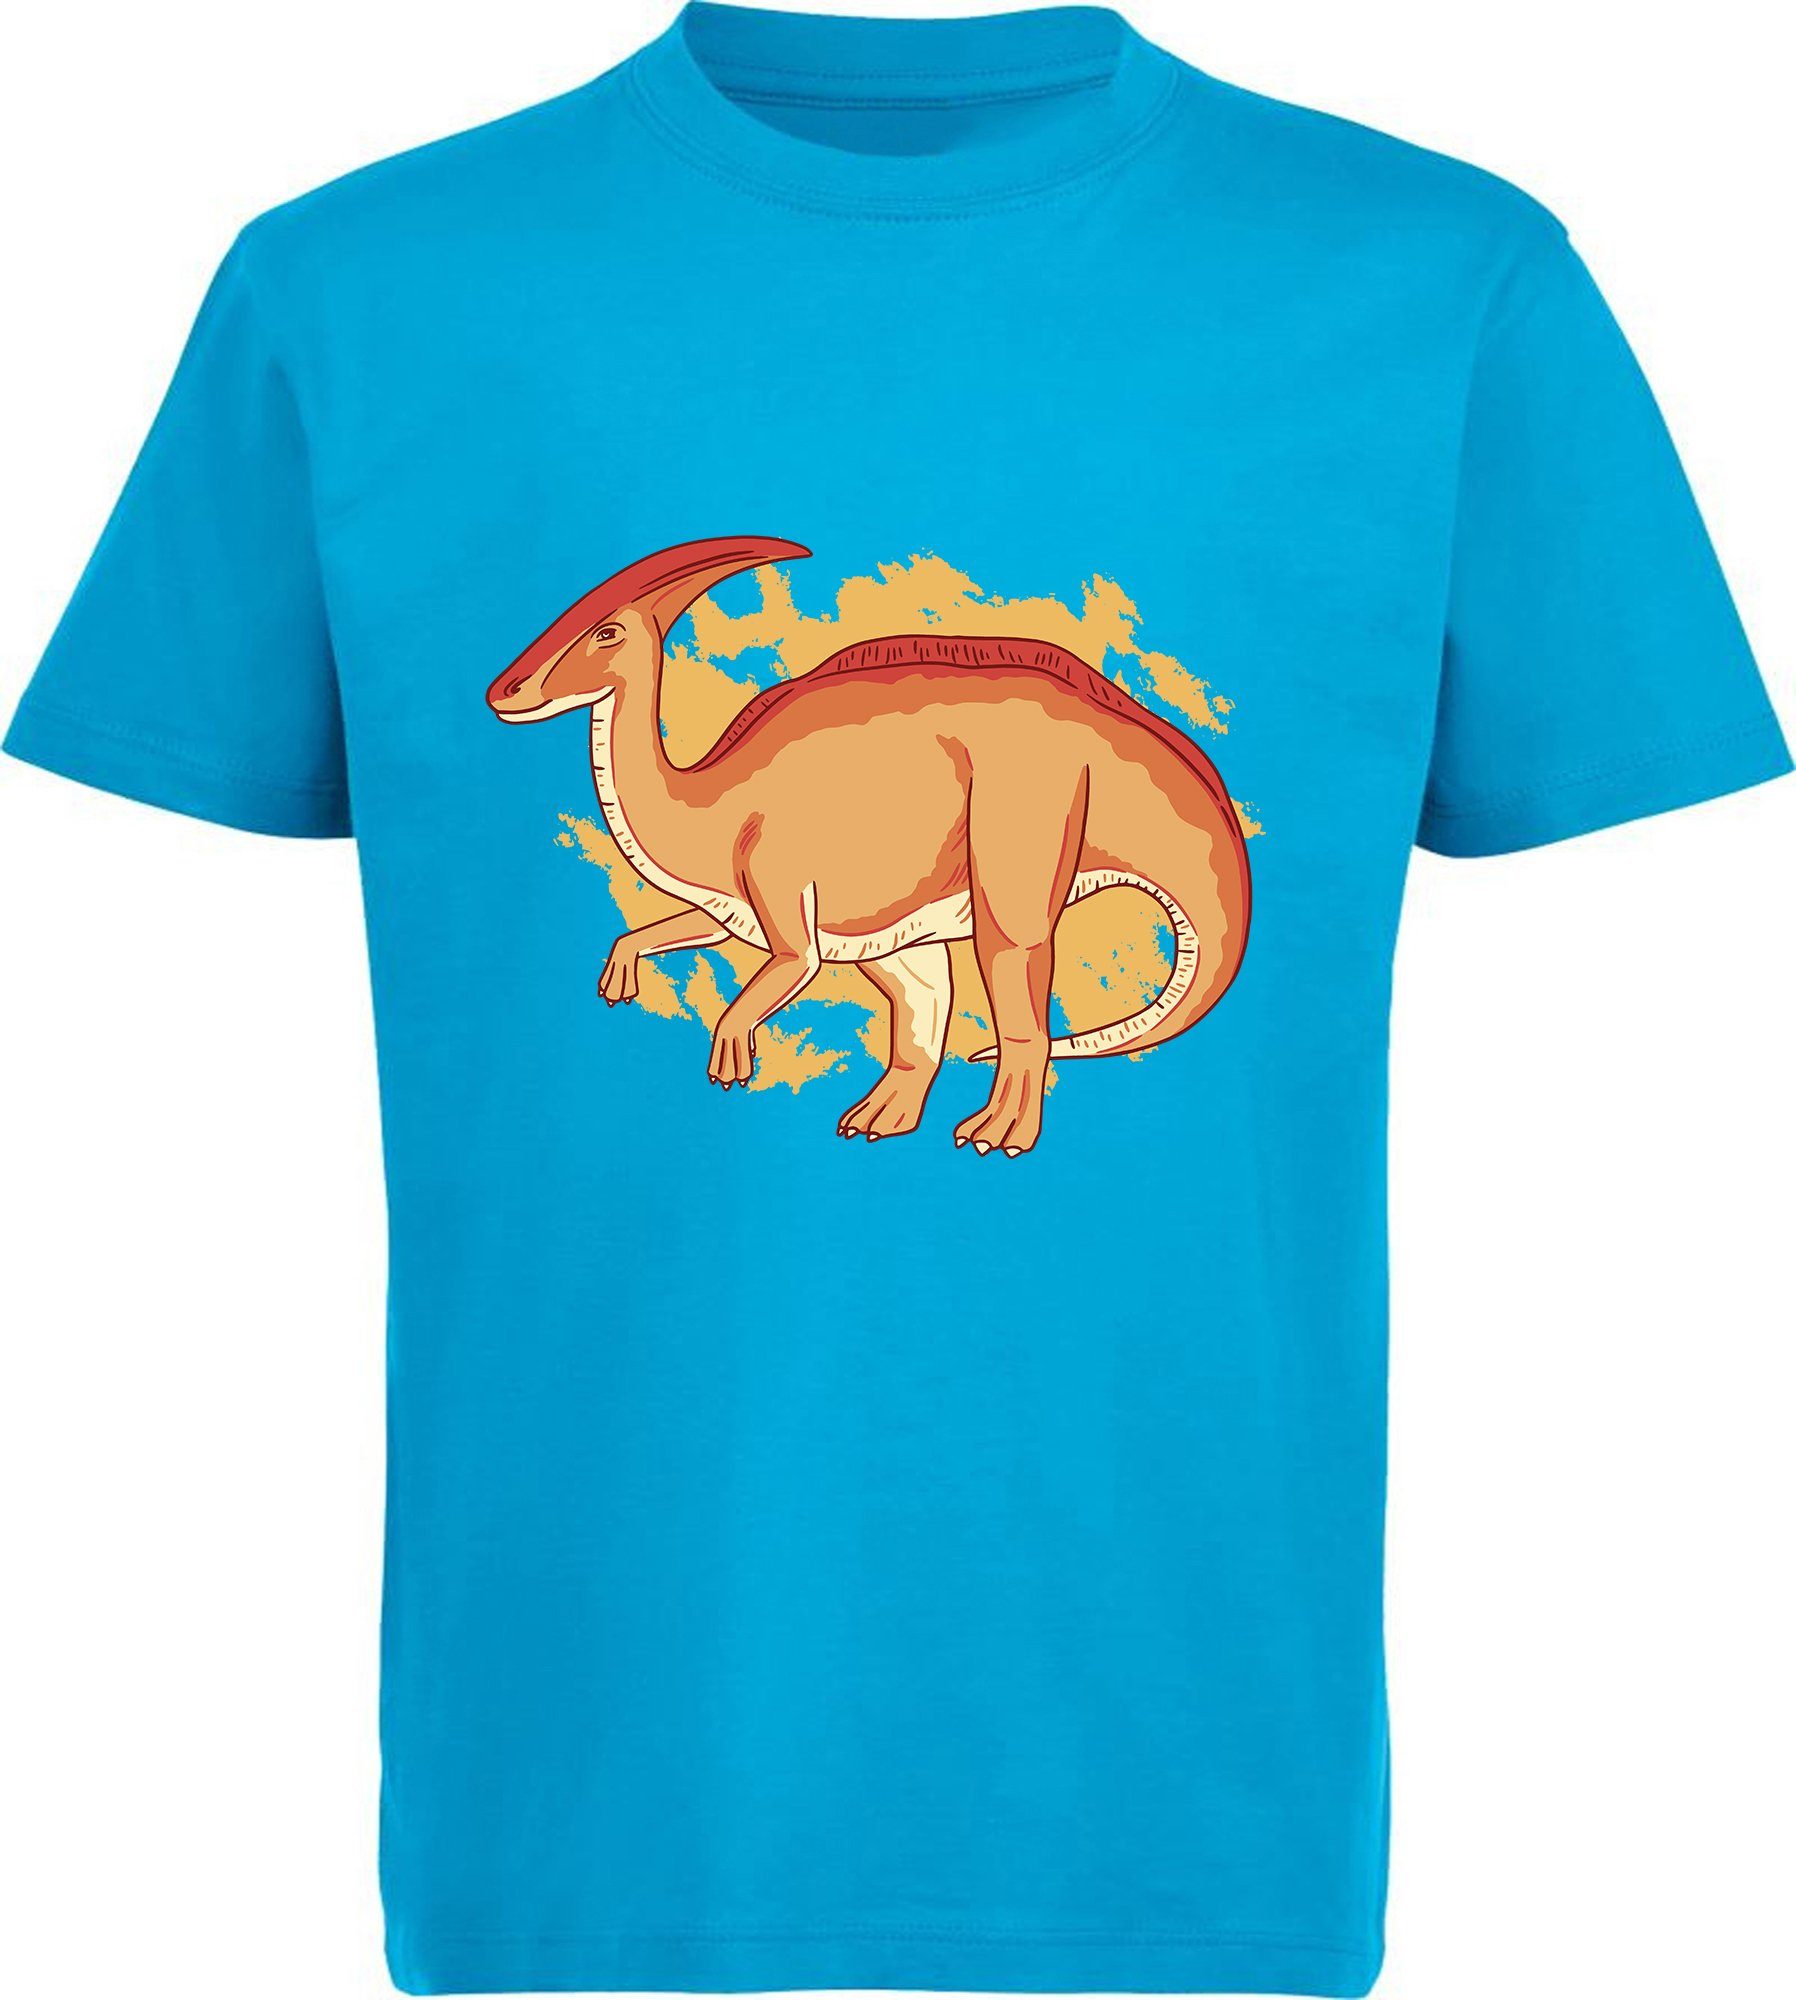 MyDesign24 Print-Shirt bedrucktes Baumwollshirt mit Kinder mit blau Dino, schwarz, aqua Parasaurolophus i86 rot, weiß, T-Shirt blau